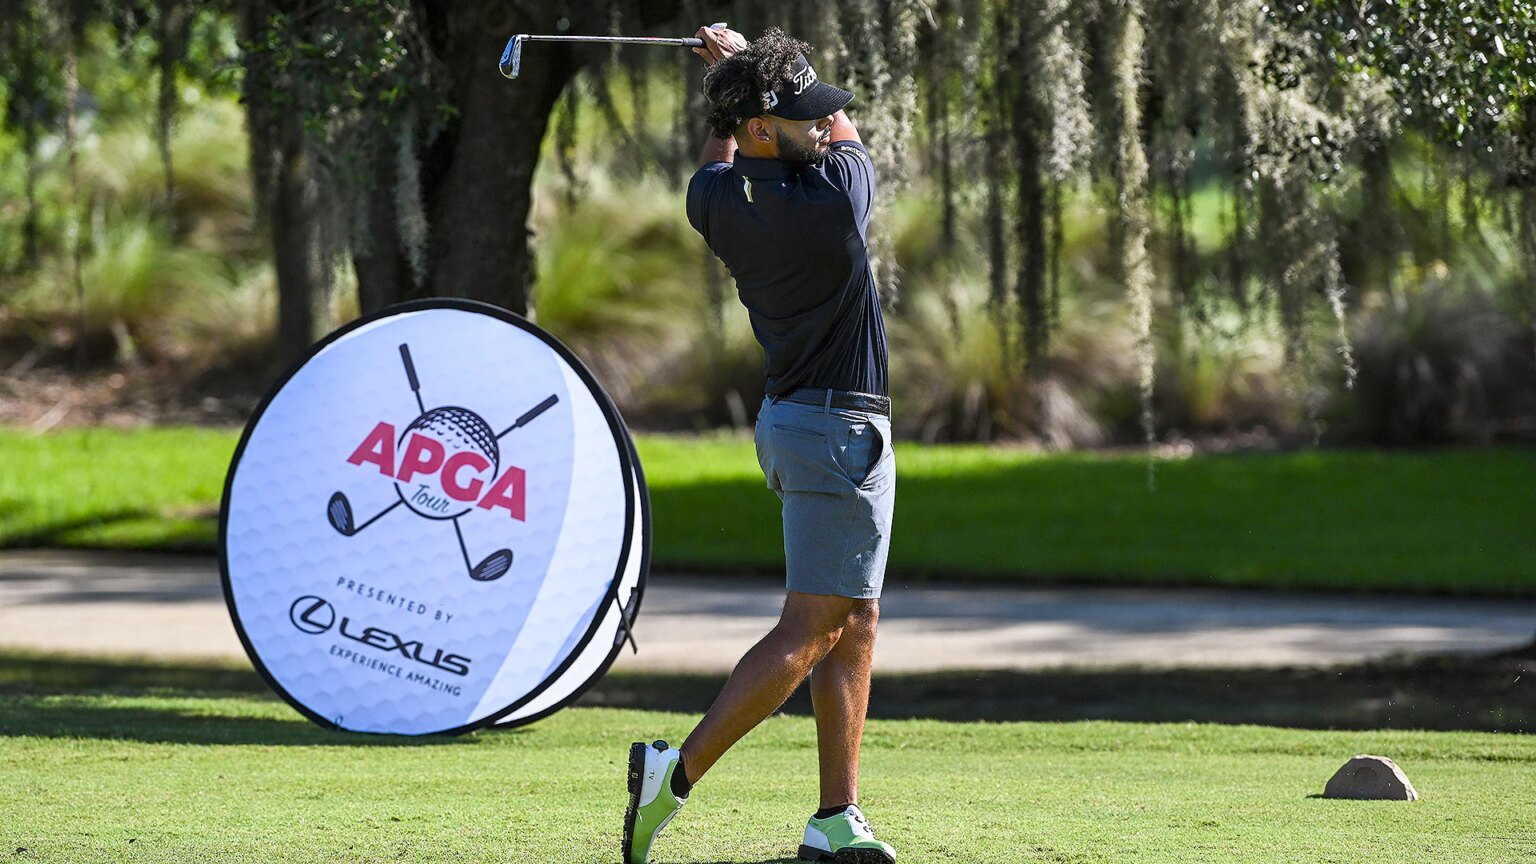 APGA Tour linking with PGA Tour, PGA Tour Champions for events later